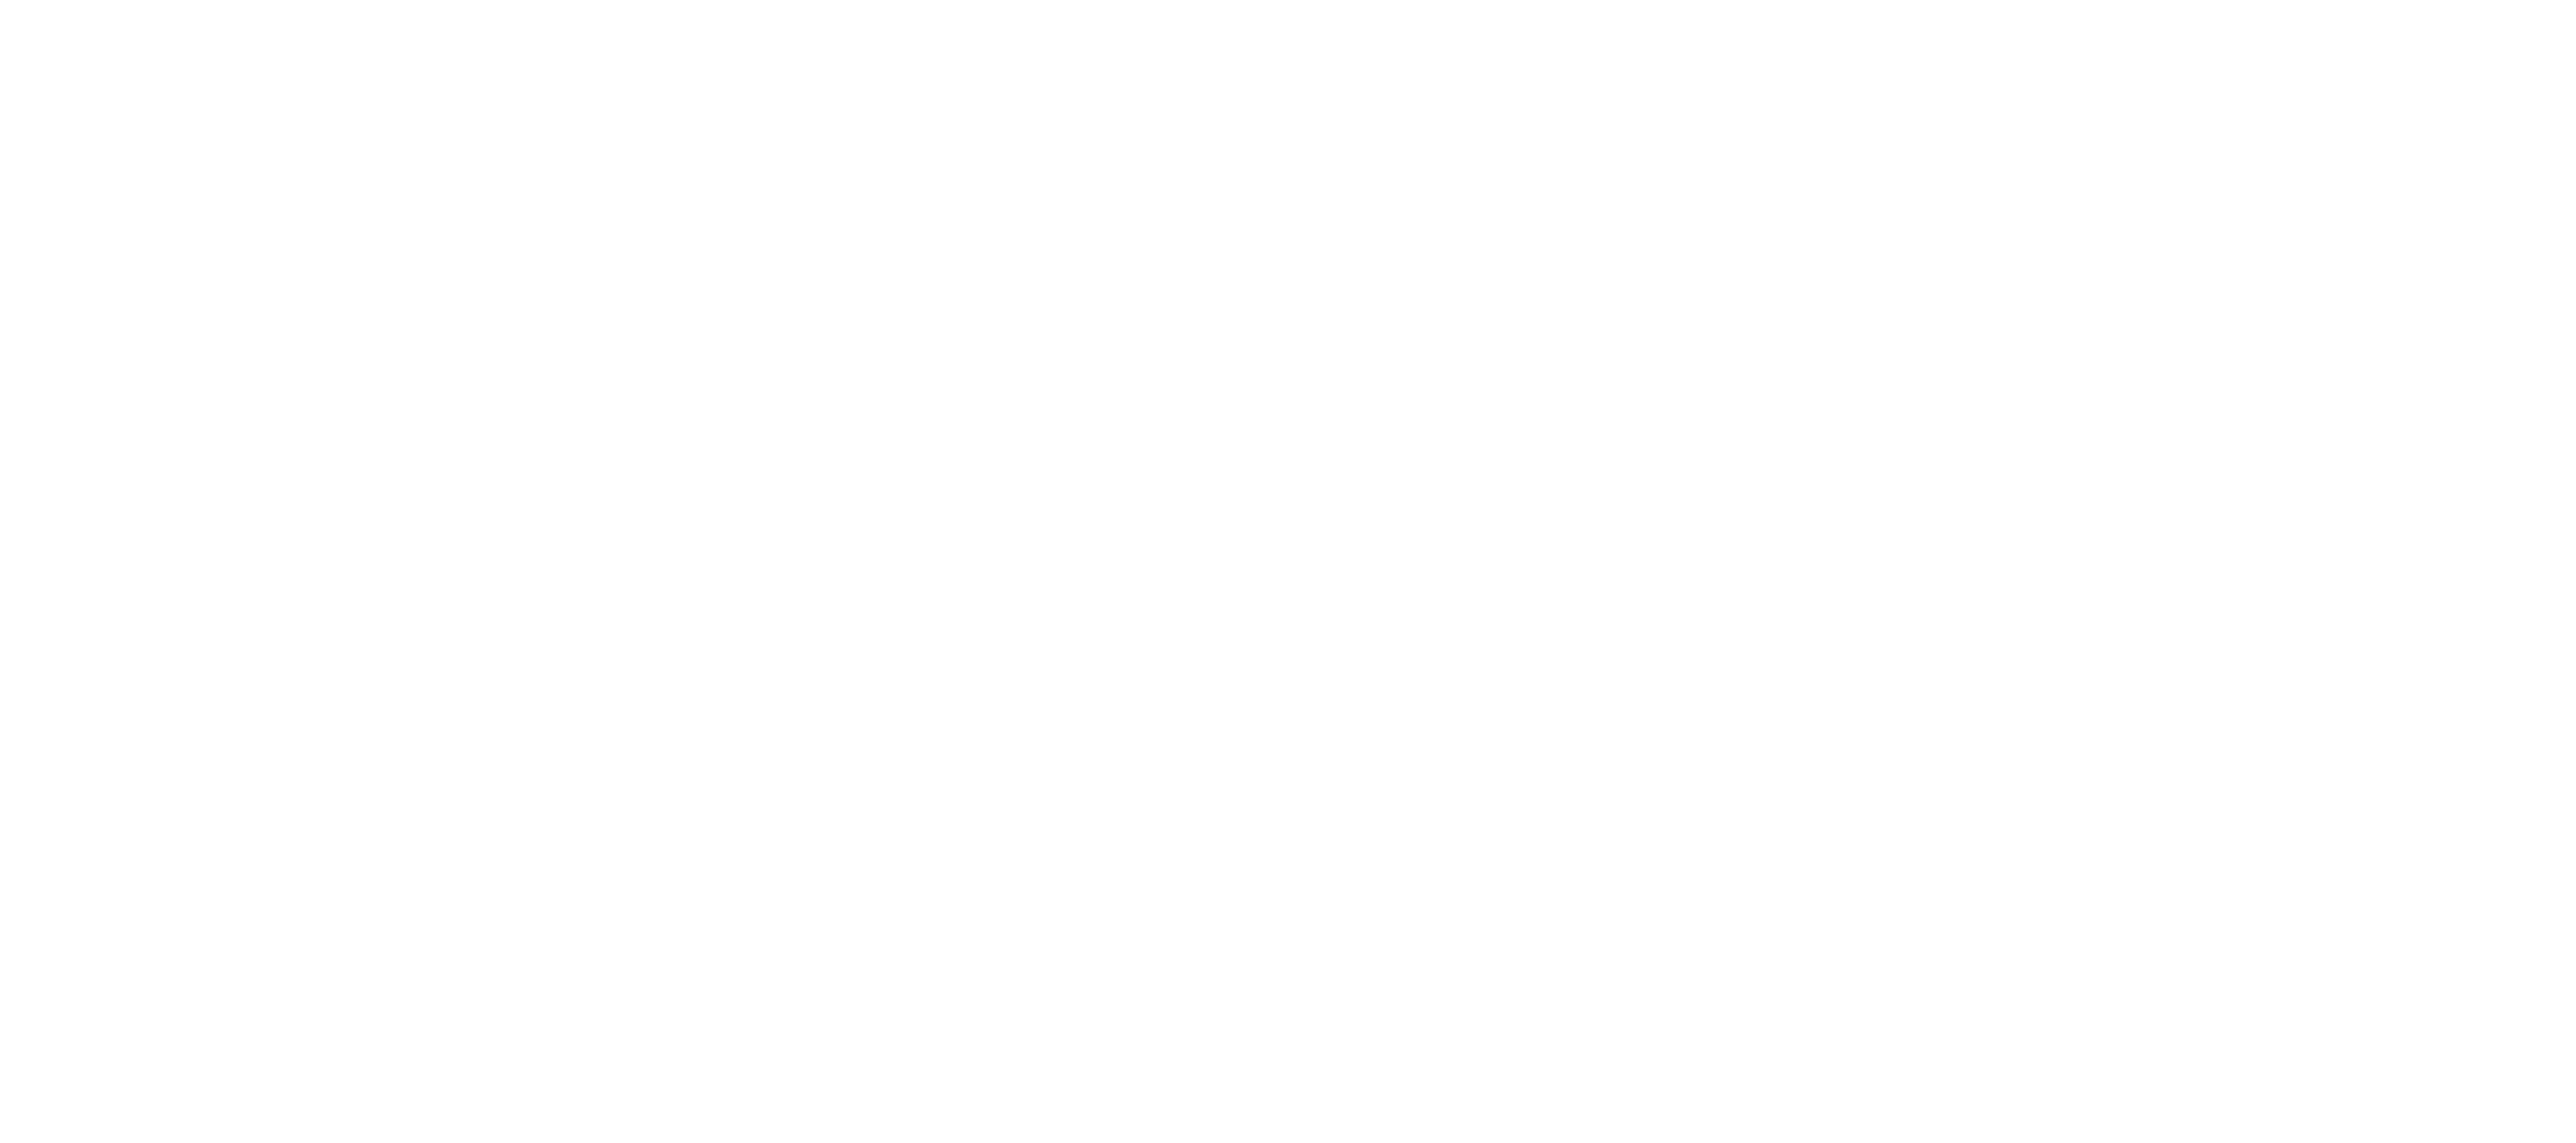 Sicilia Logo